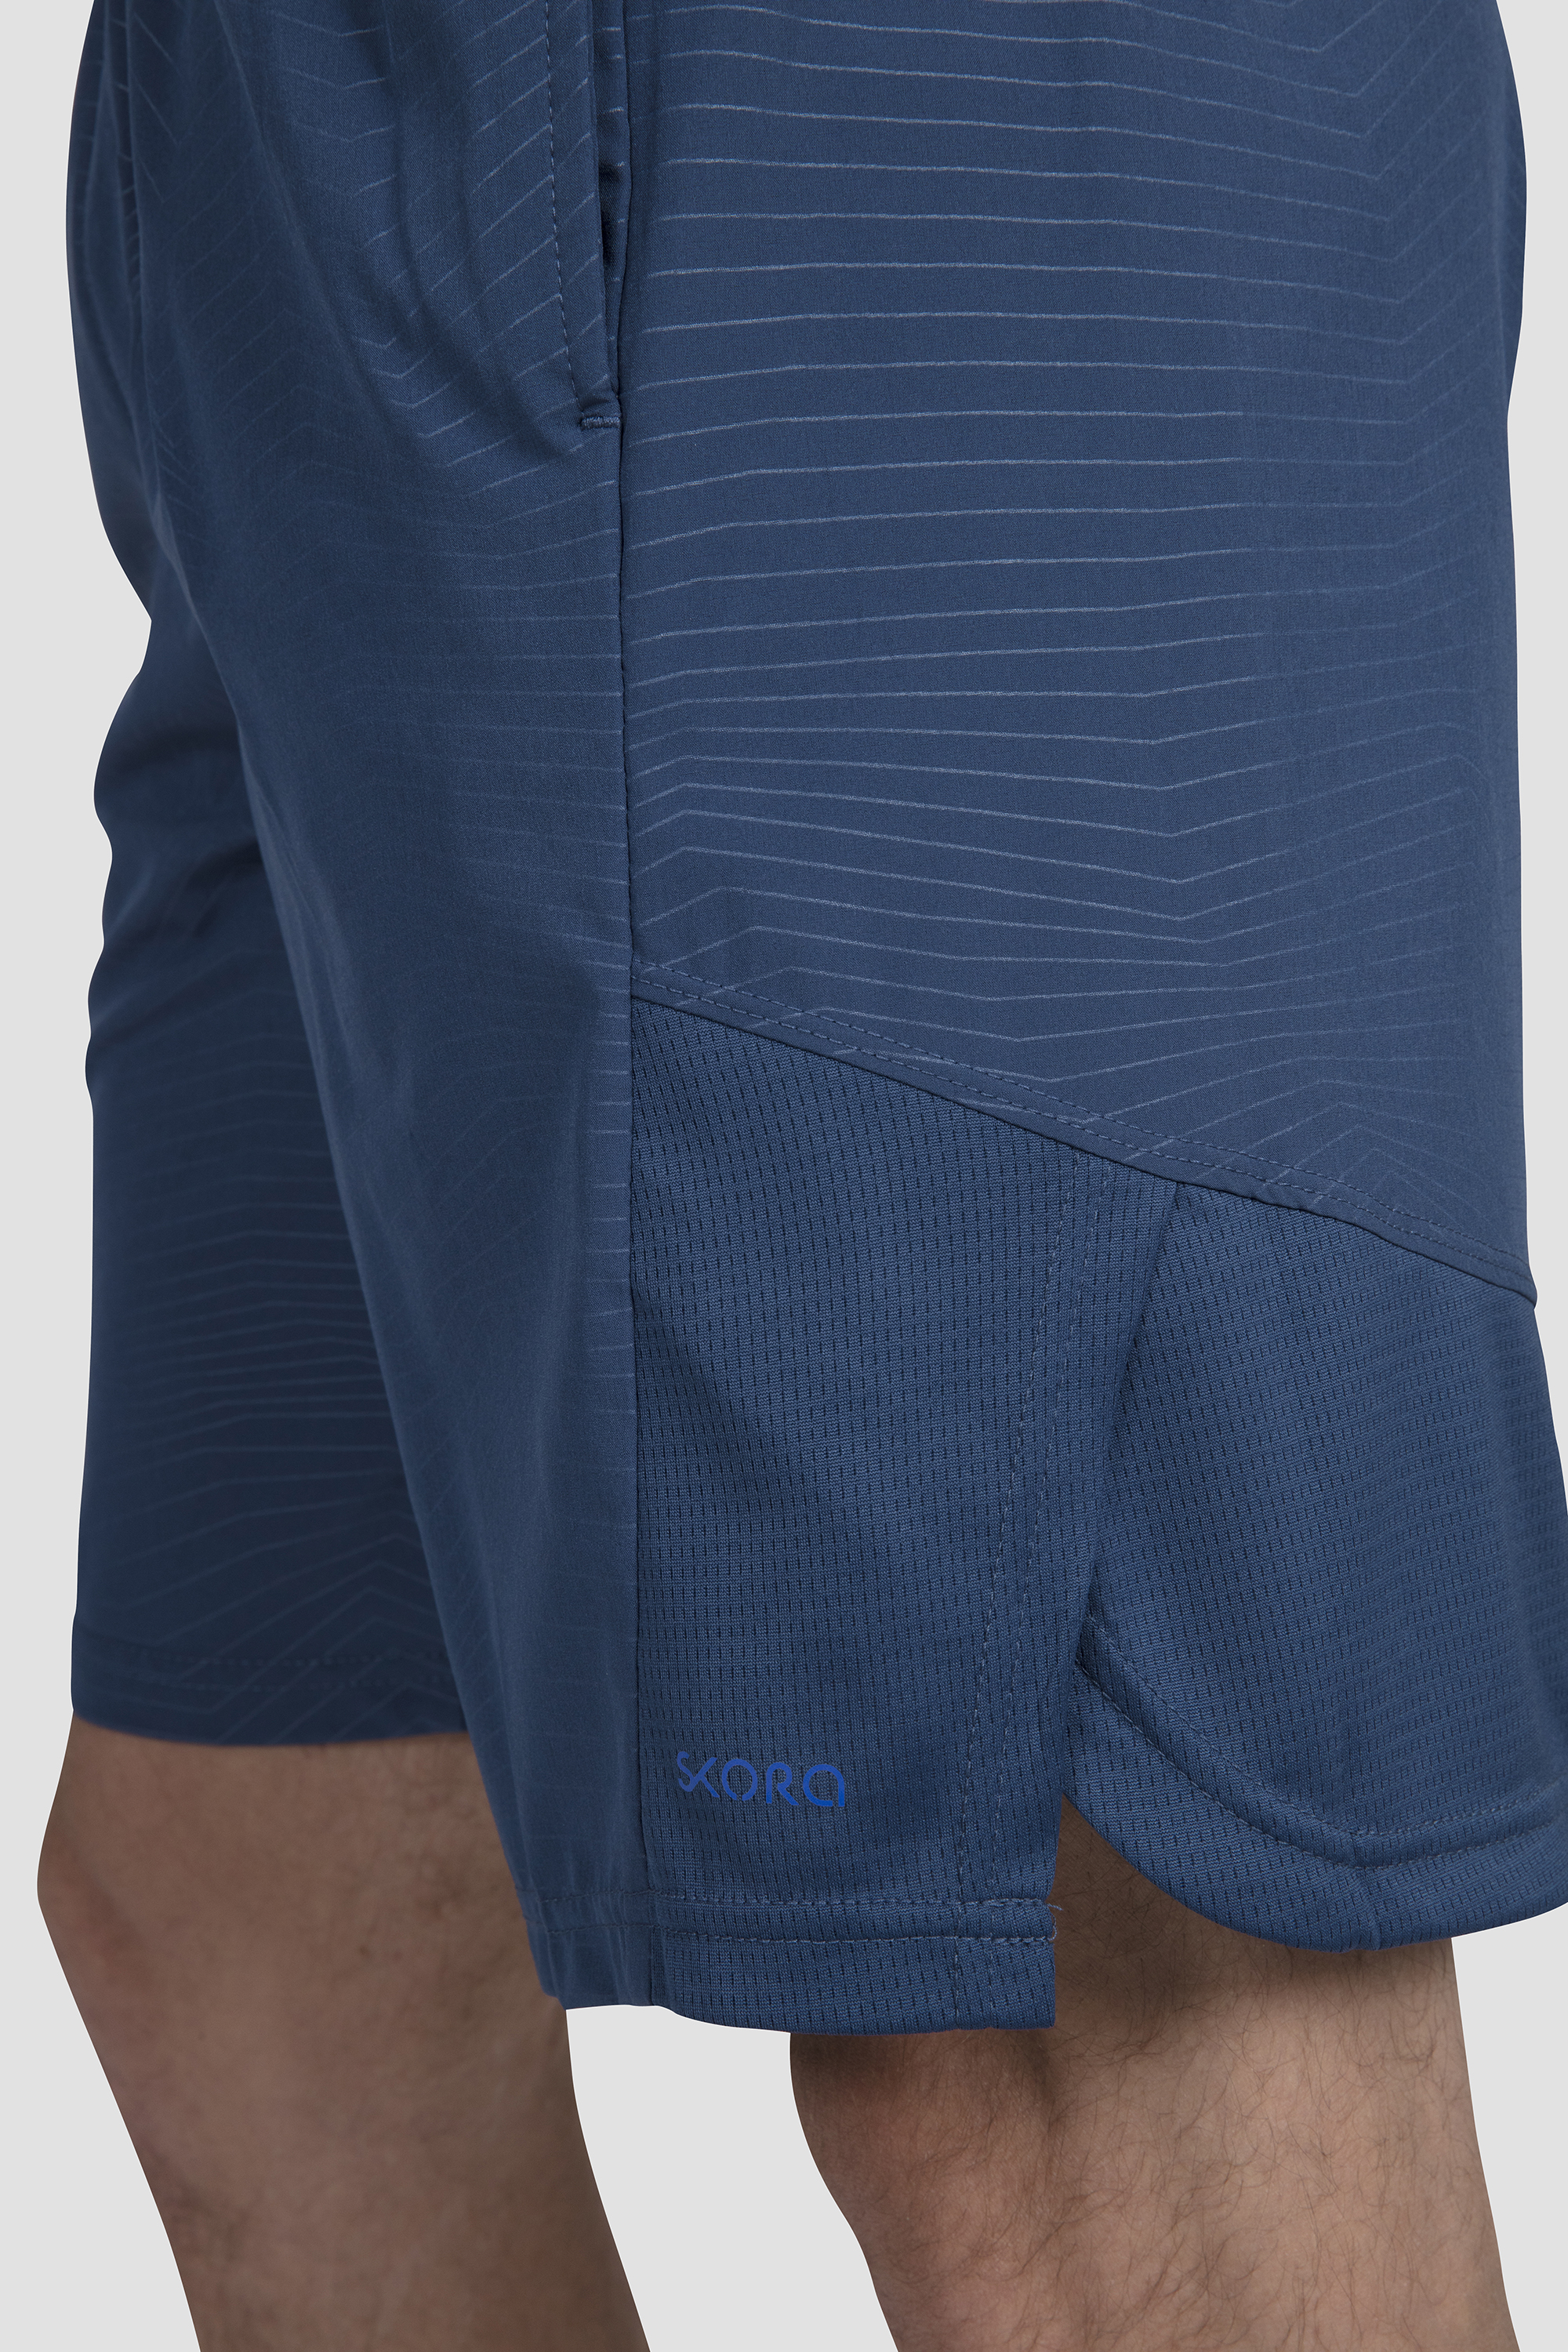 skora running shorts review